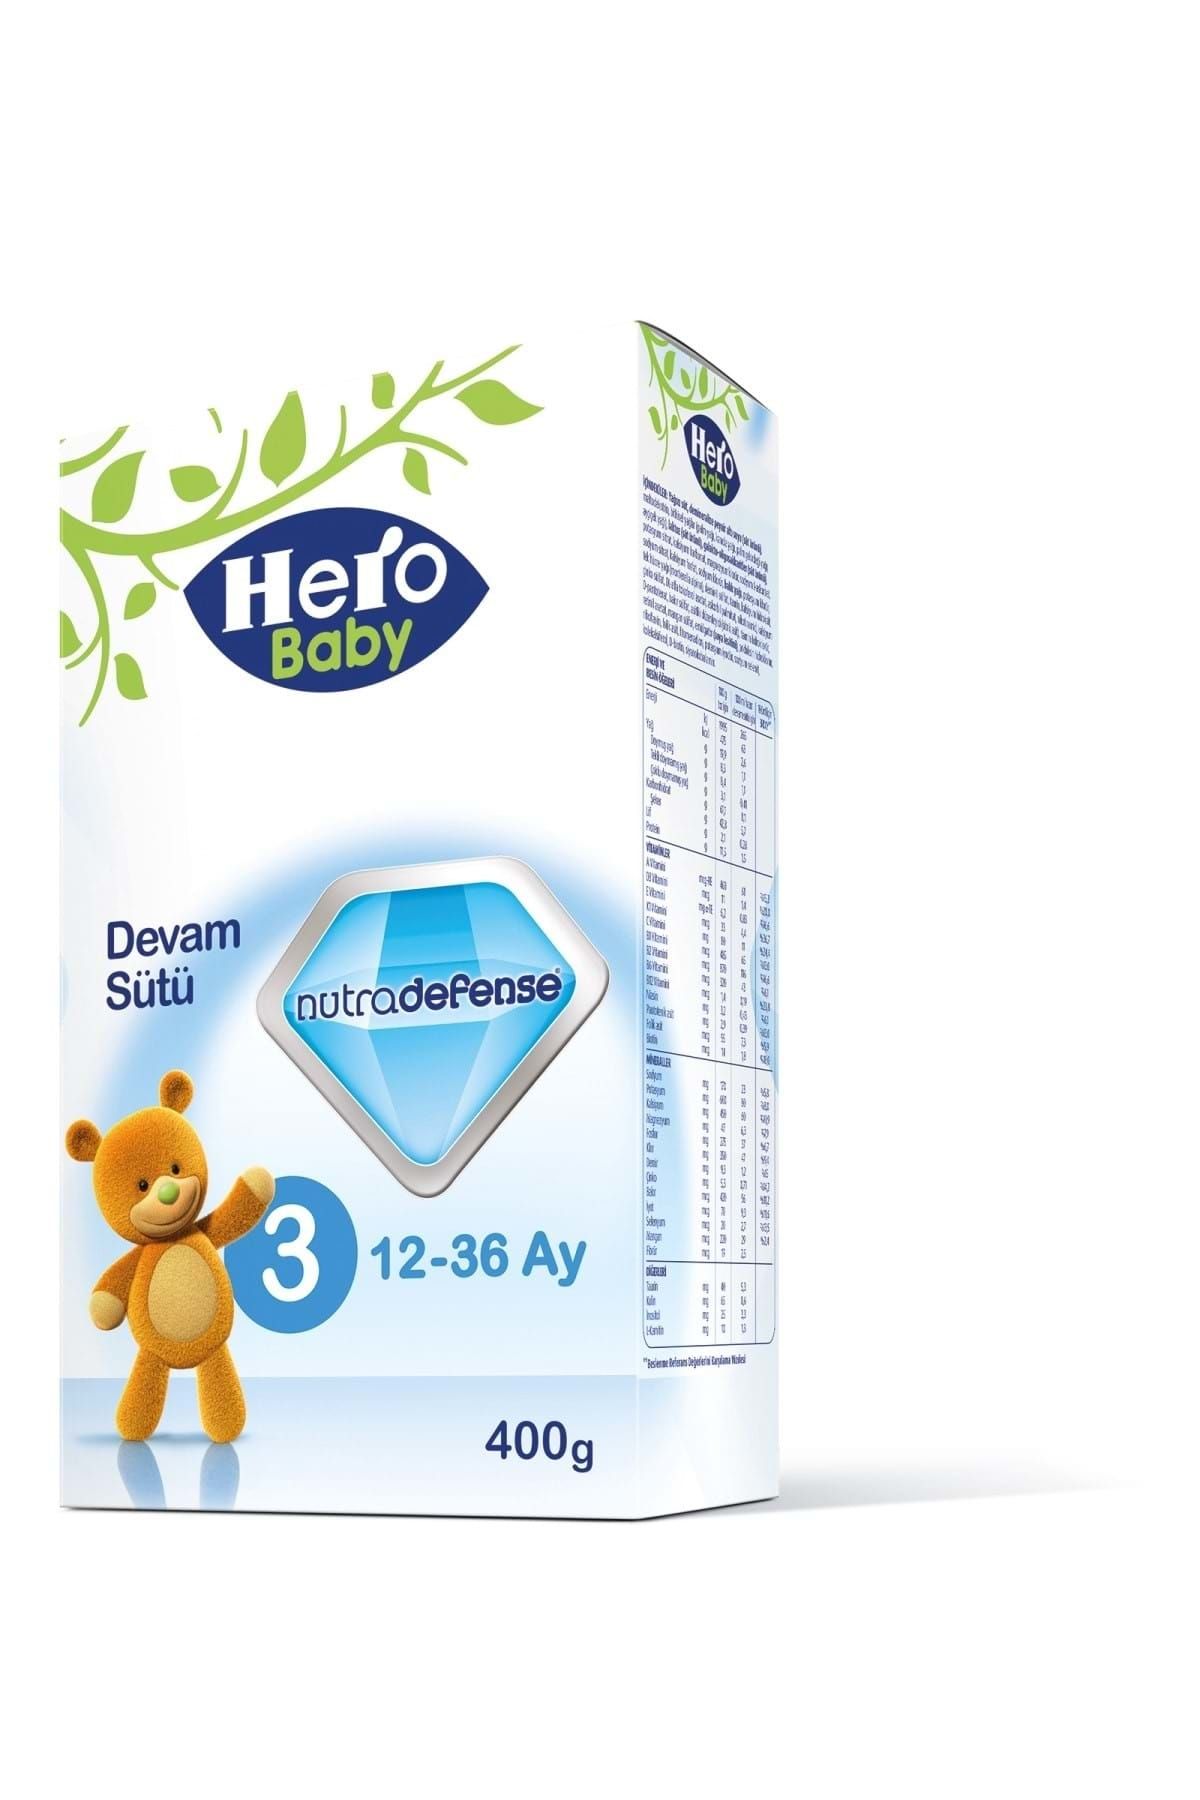 Hero Baby Nutradefense Devam Sütü 400Gr No:3 12-36 Ay Fiyatı, Yorumları -  Trendyol